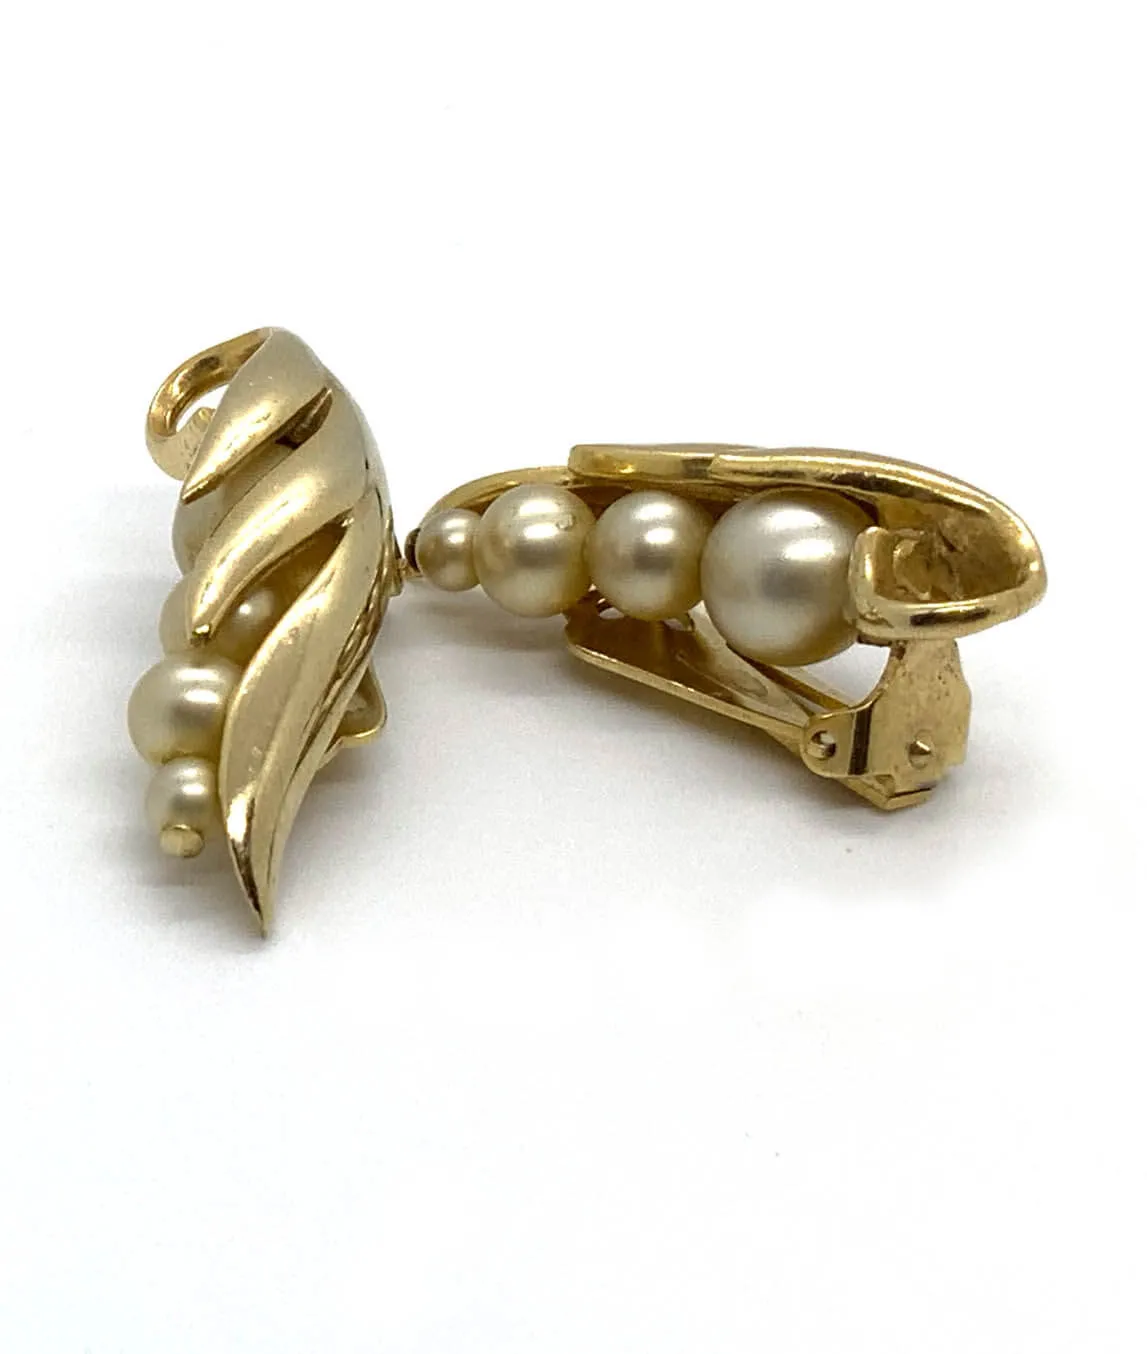 Ledo/Polcini earrings pearl and gold plated metal